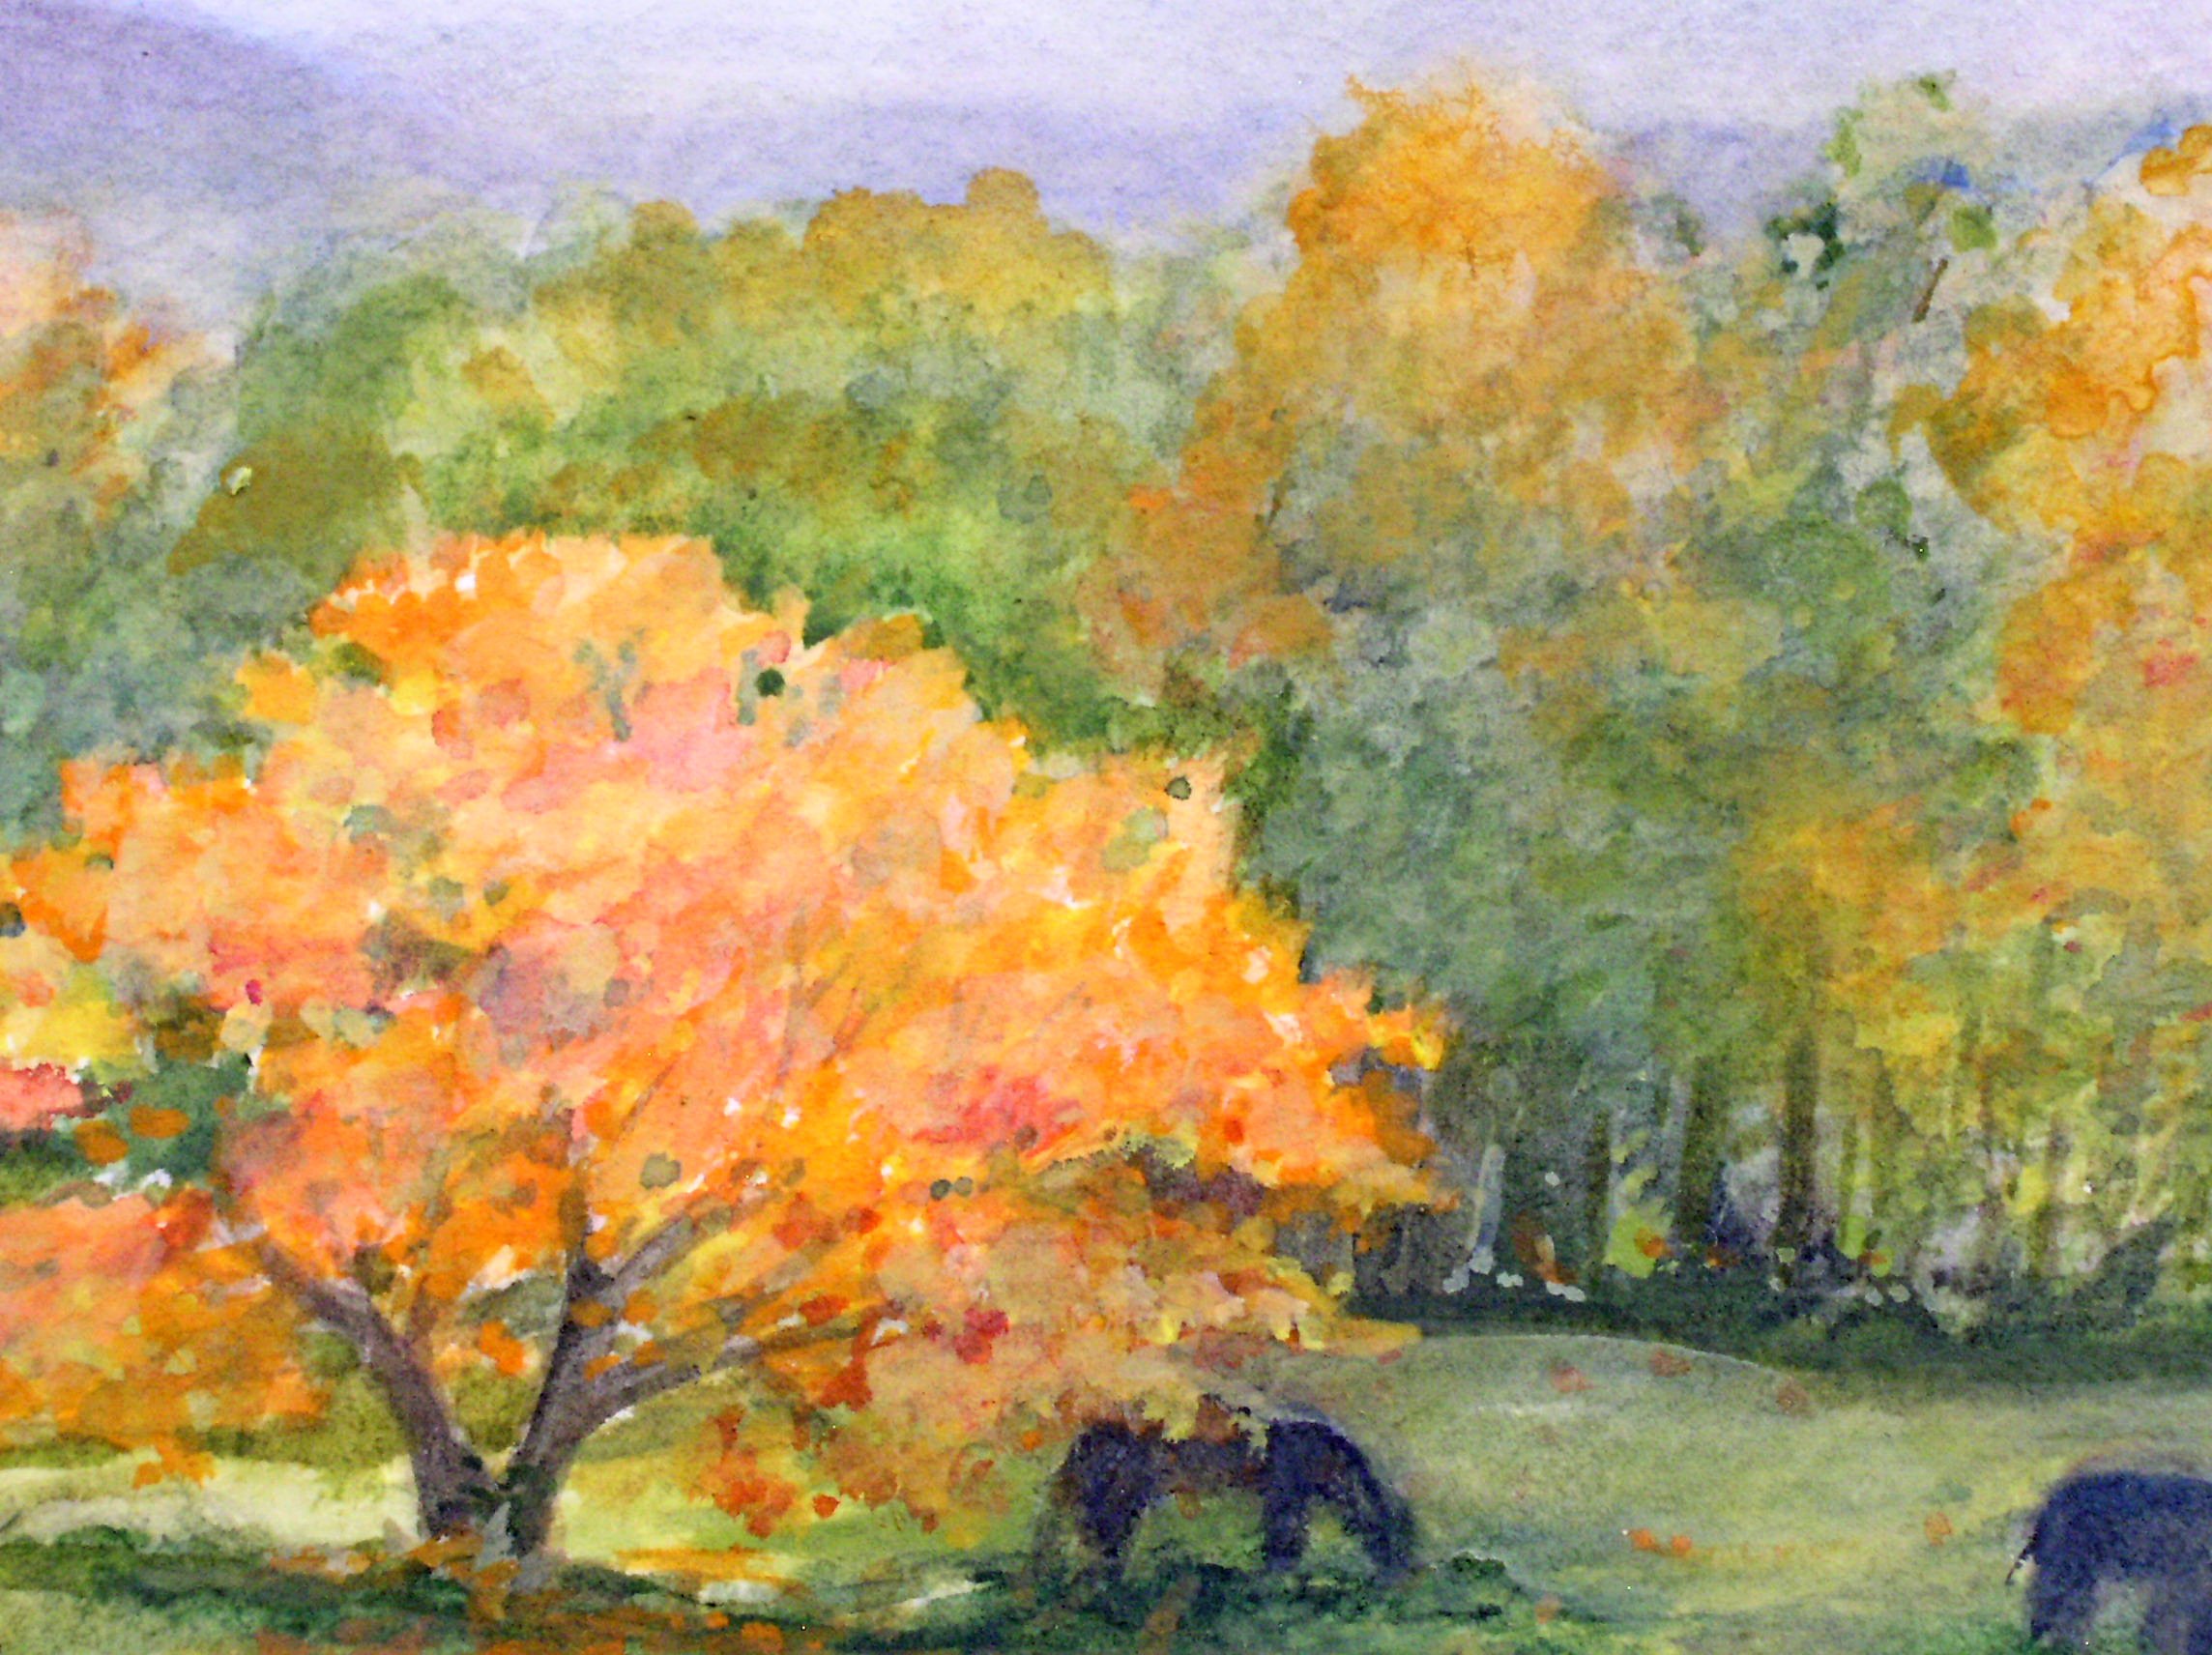 Fall Autumn Landscape Watercolor Picturesque Scene Nature Art Painting